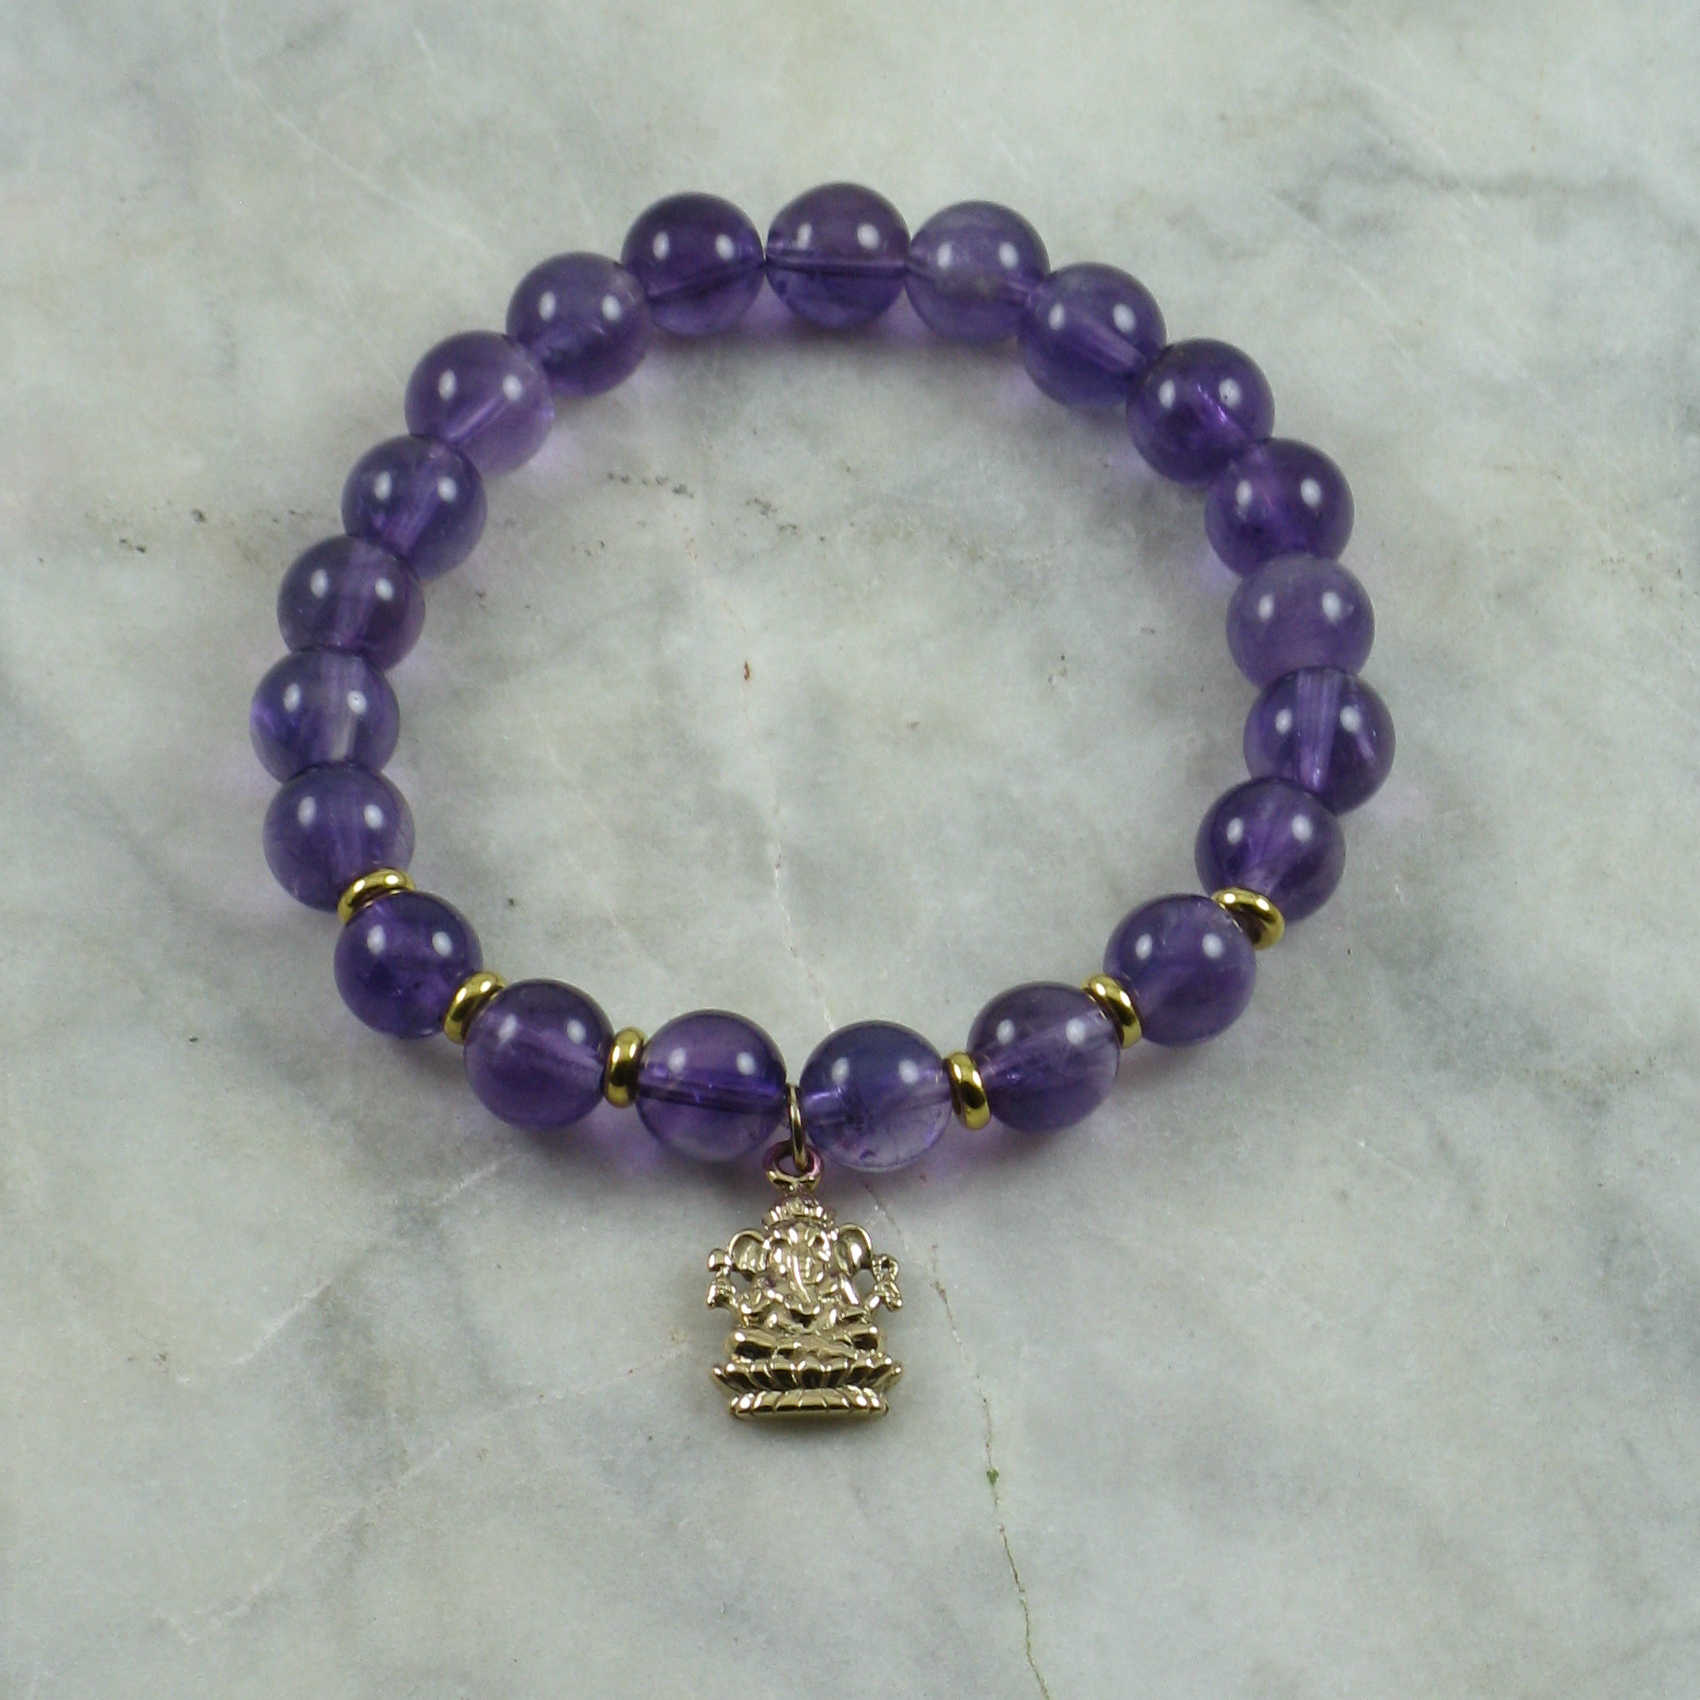 Ganesha Mala Bracelet  21 amethyst mala beads in African violet